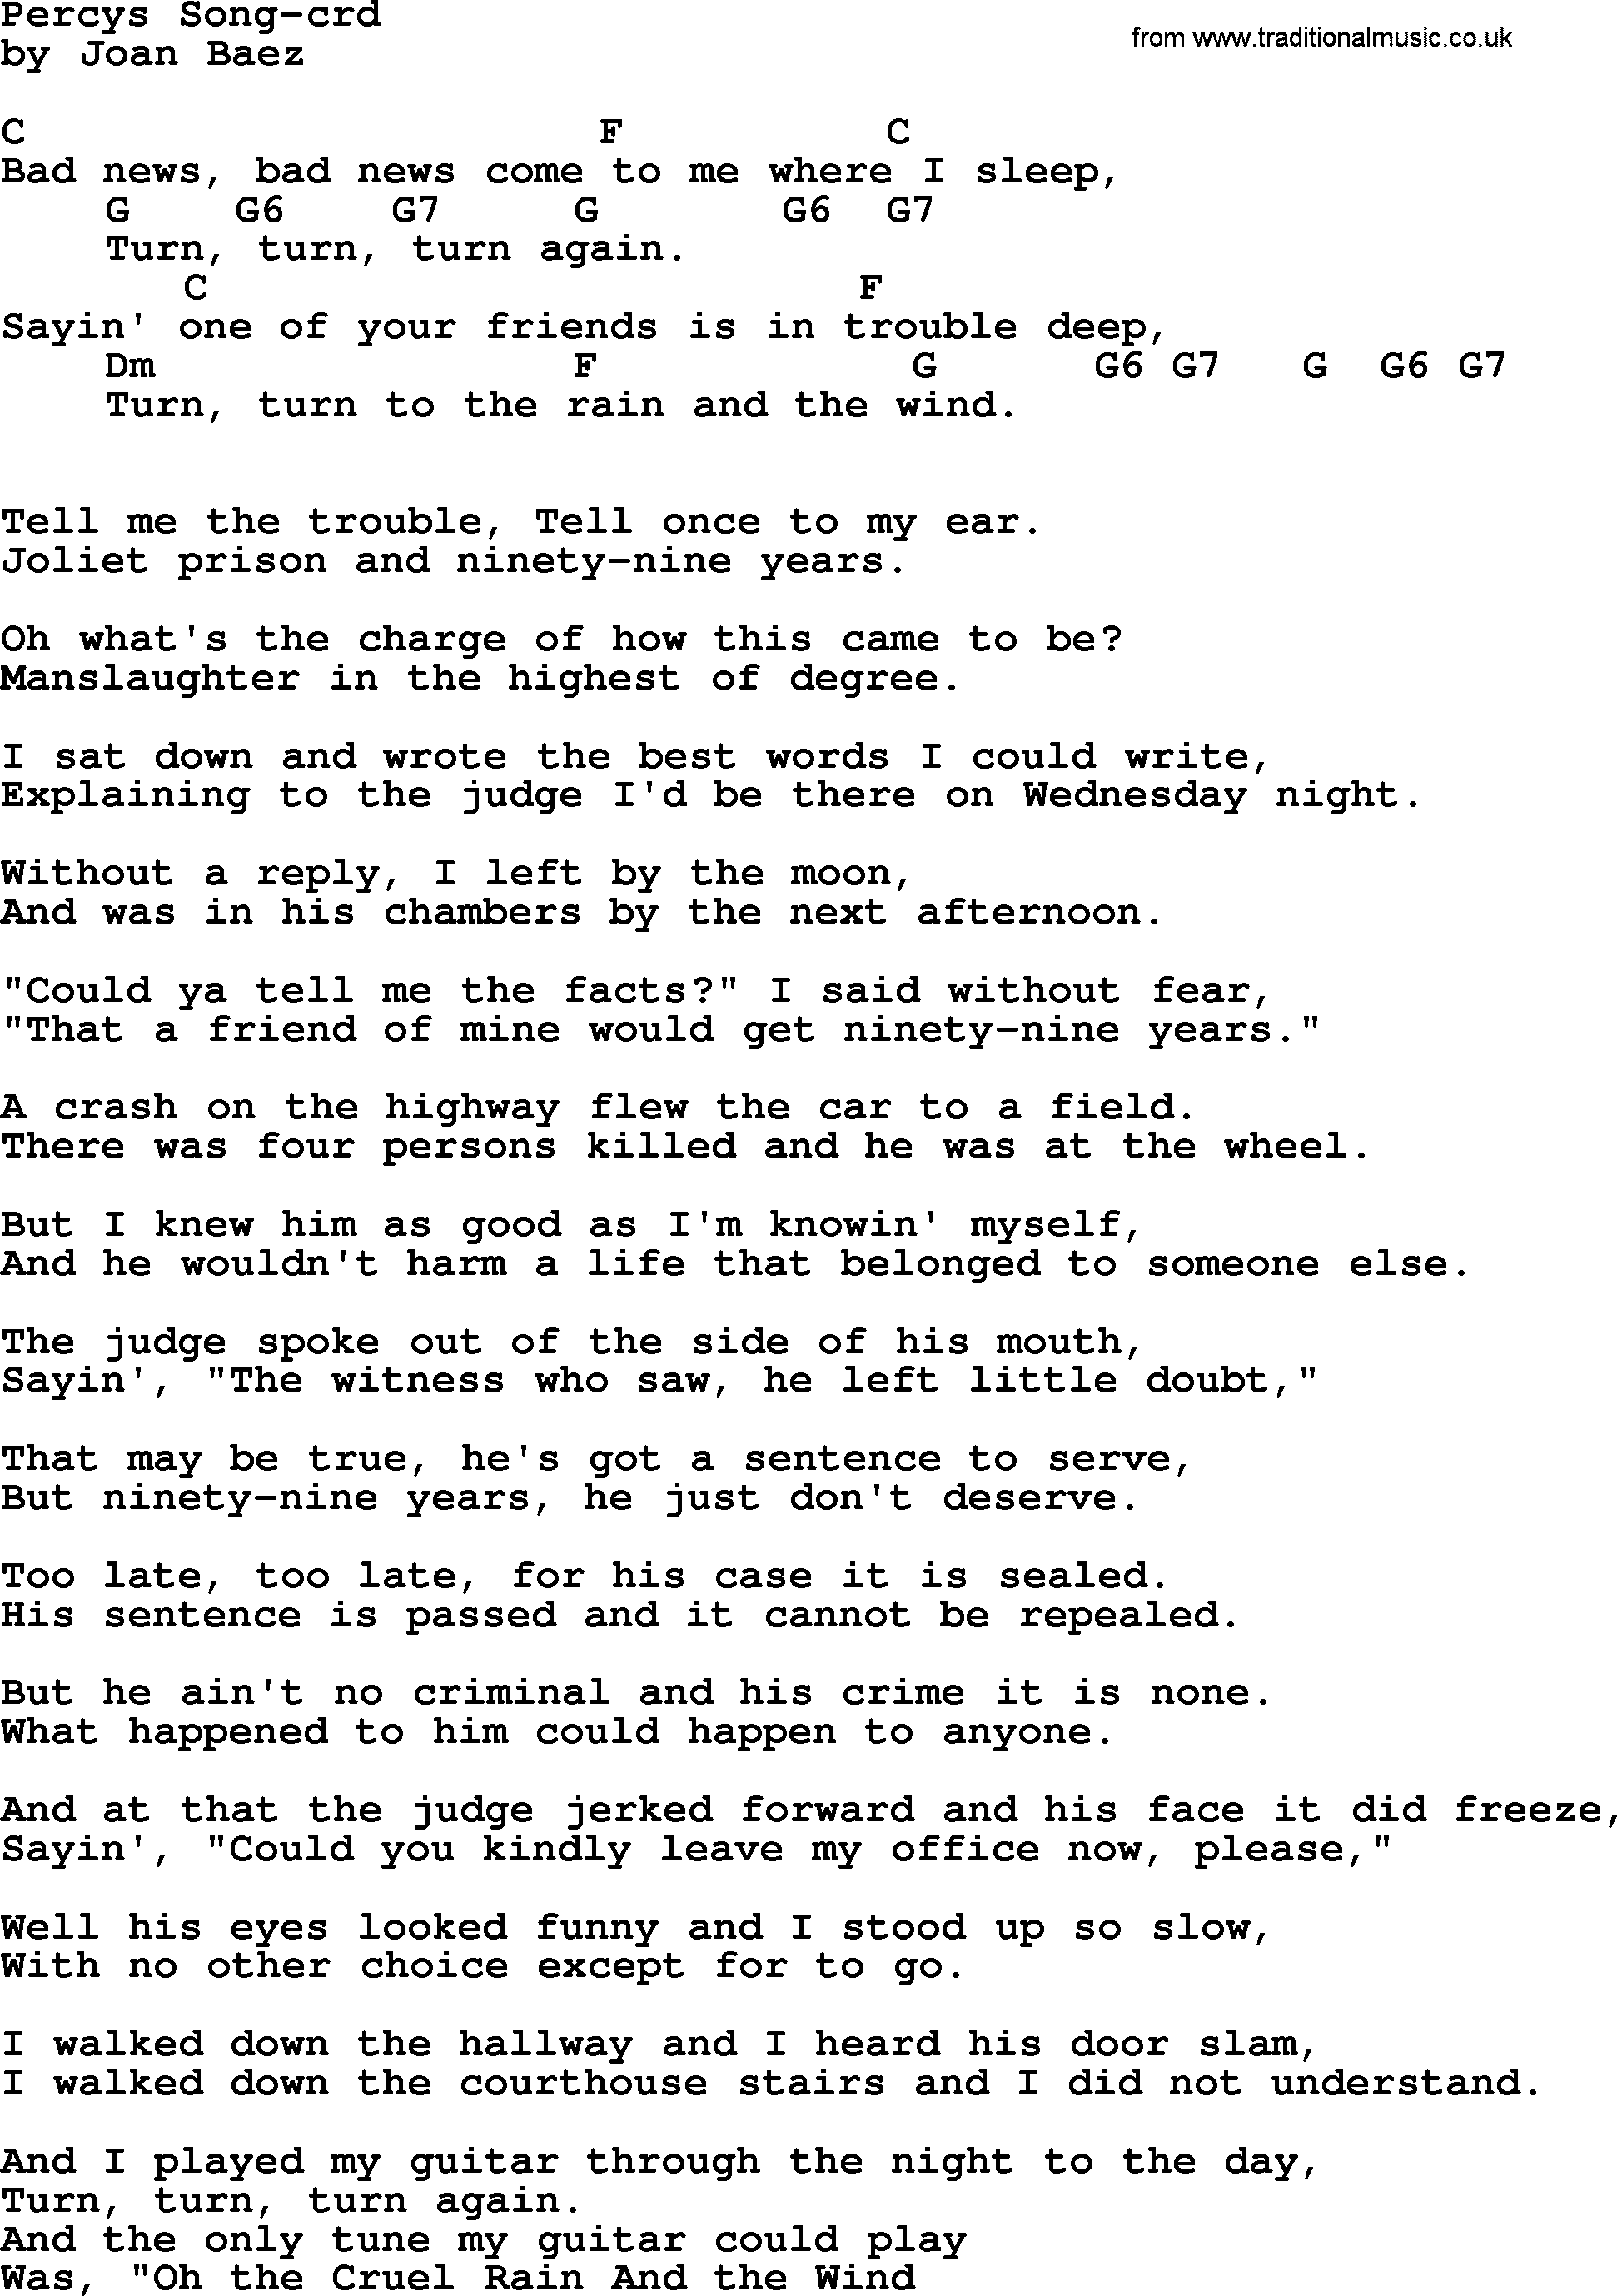 Joan Baez song Percys Song lyrics and chords